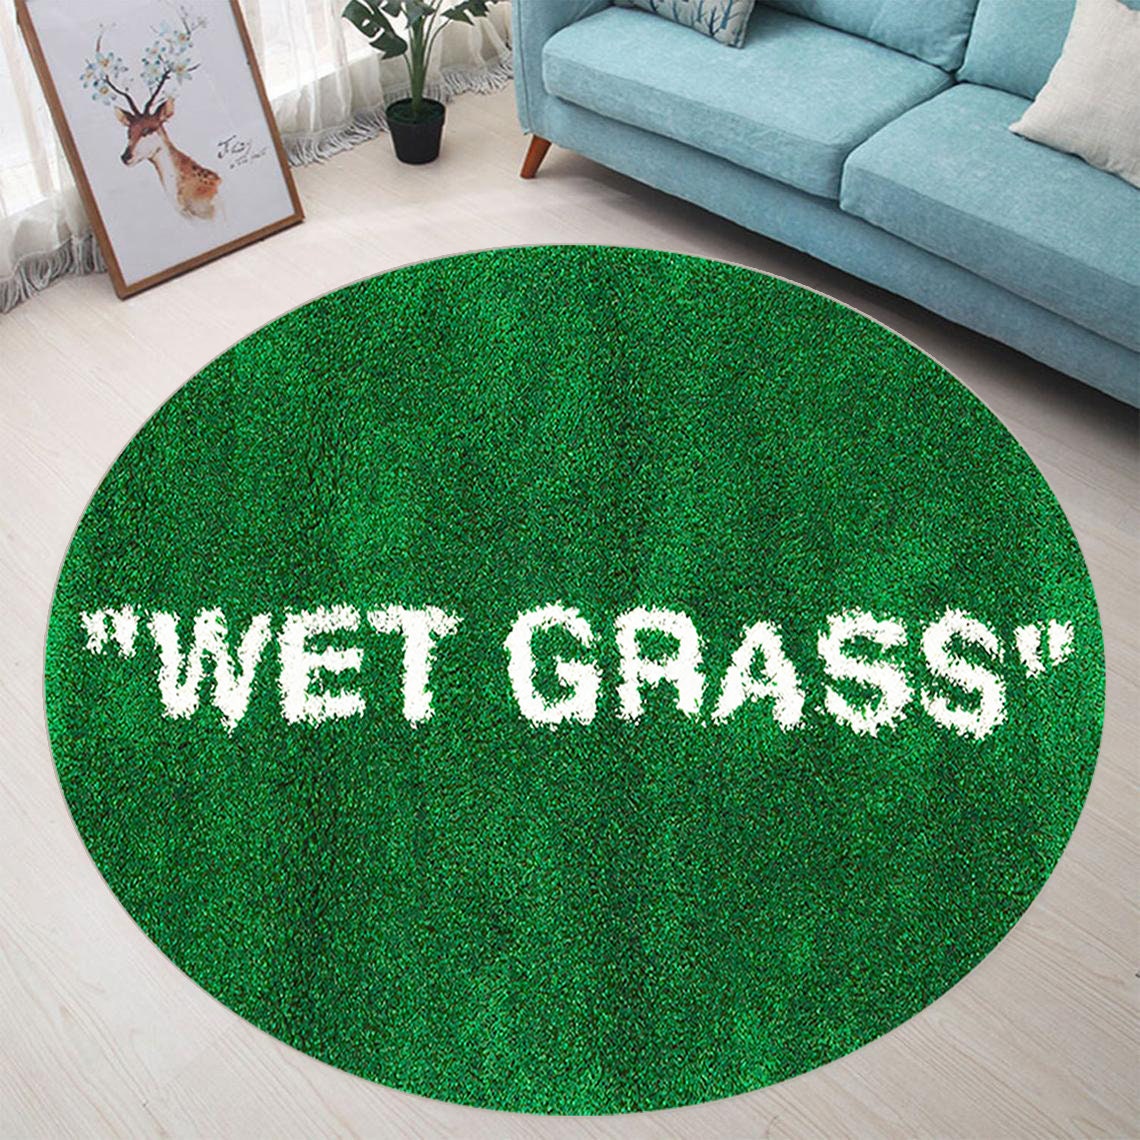 Wet Grass Weet Grass Round Rug Patterned Rug Wet Grass Rug | Etsy